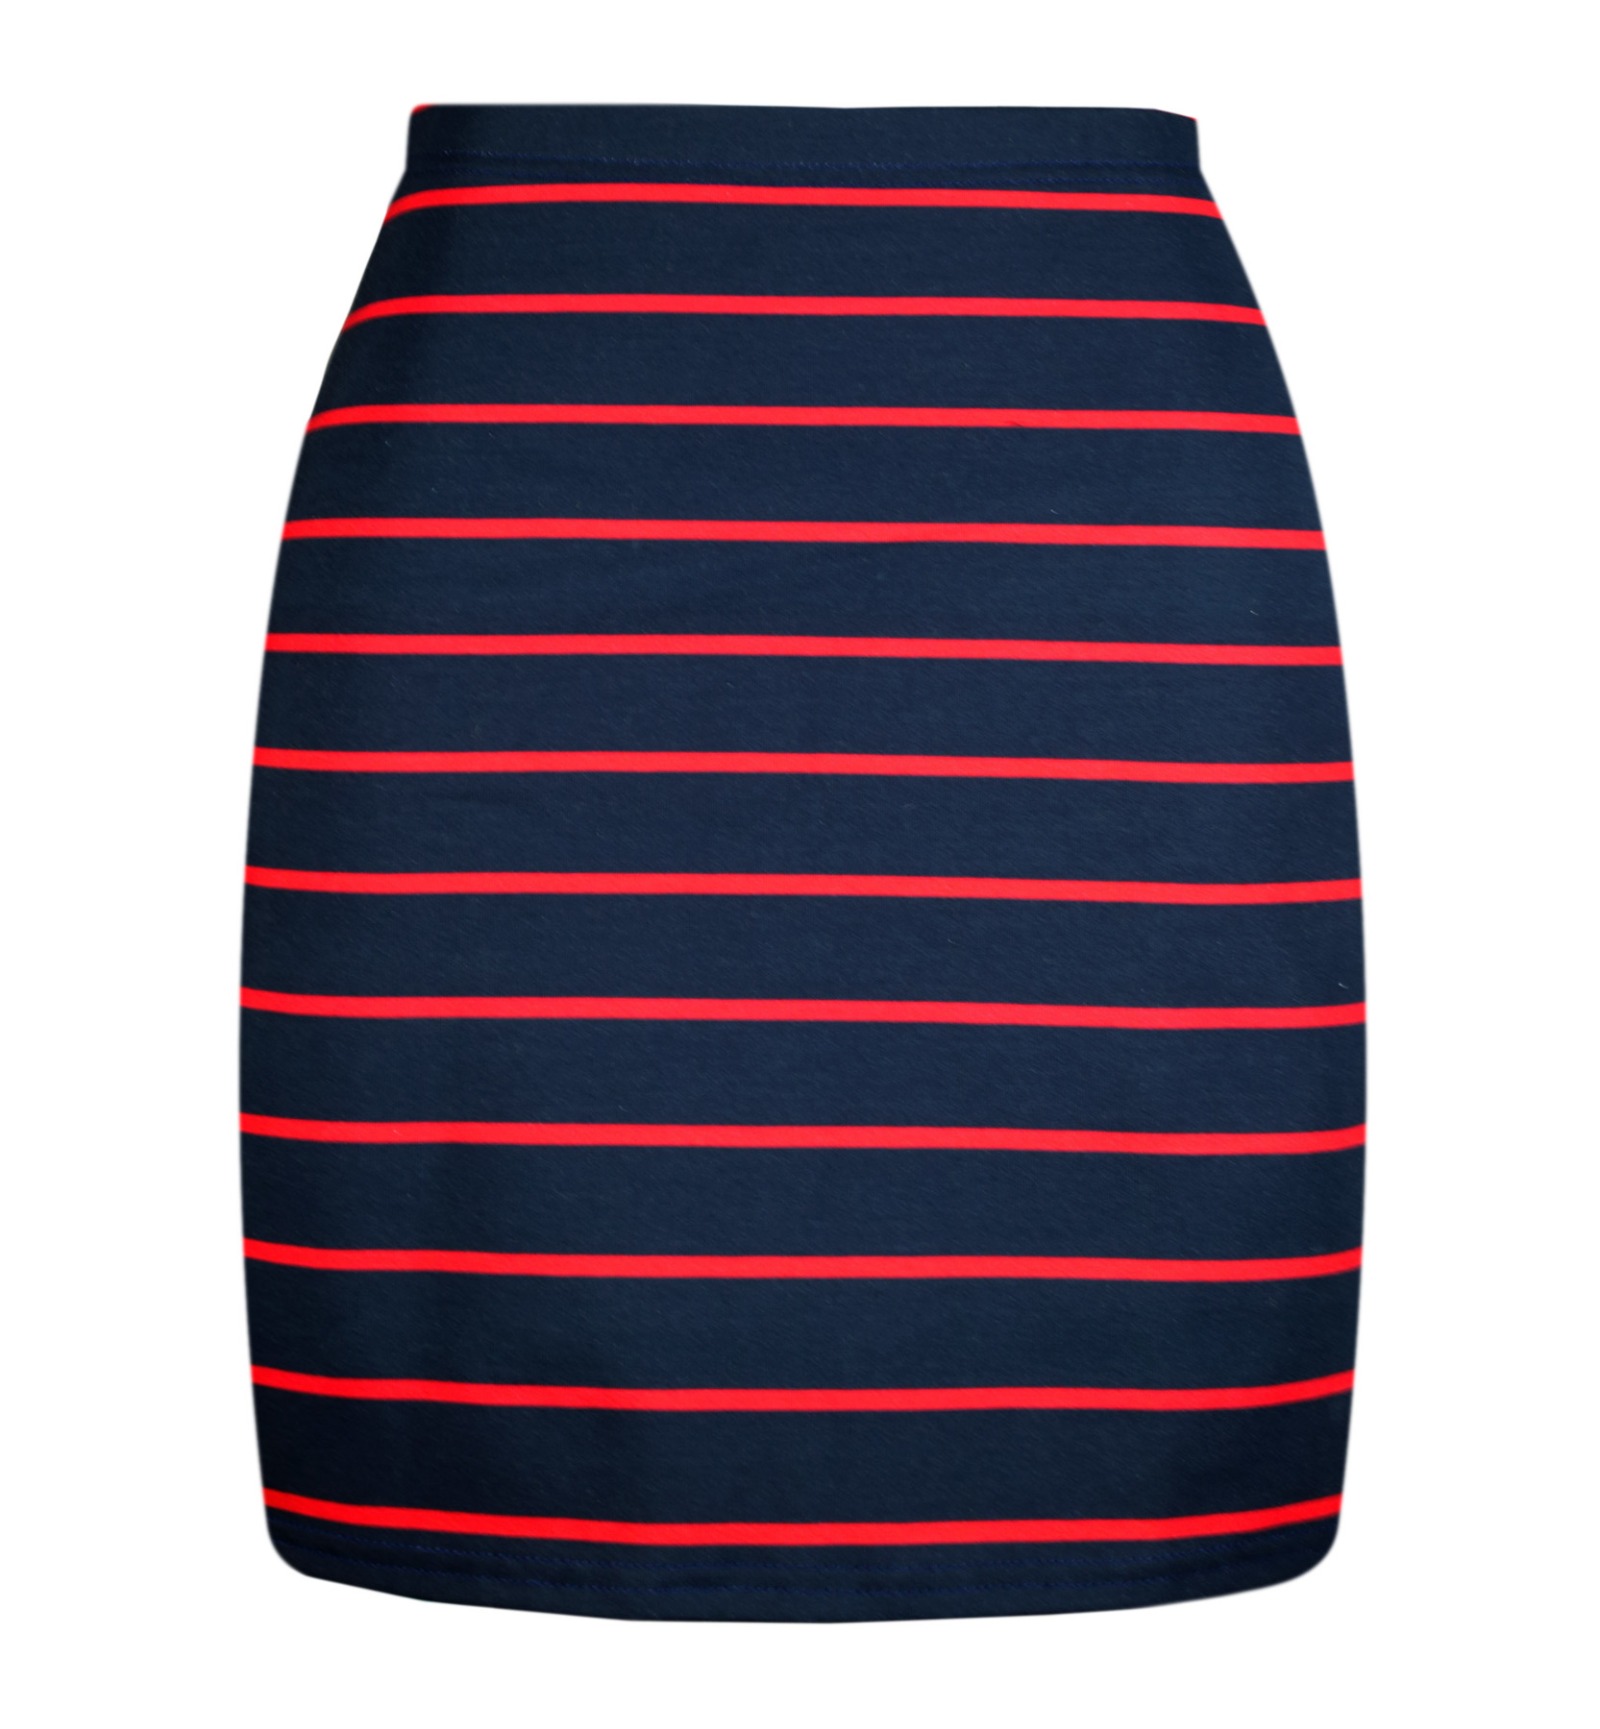 Organic skirt Snoba navy blue + red stripes